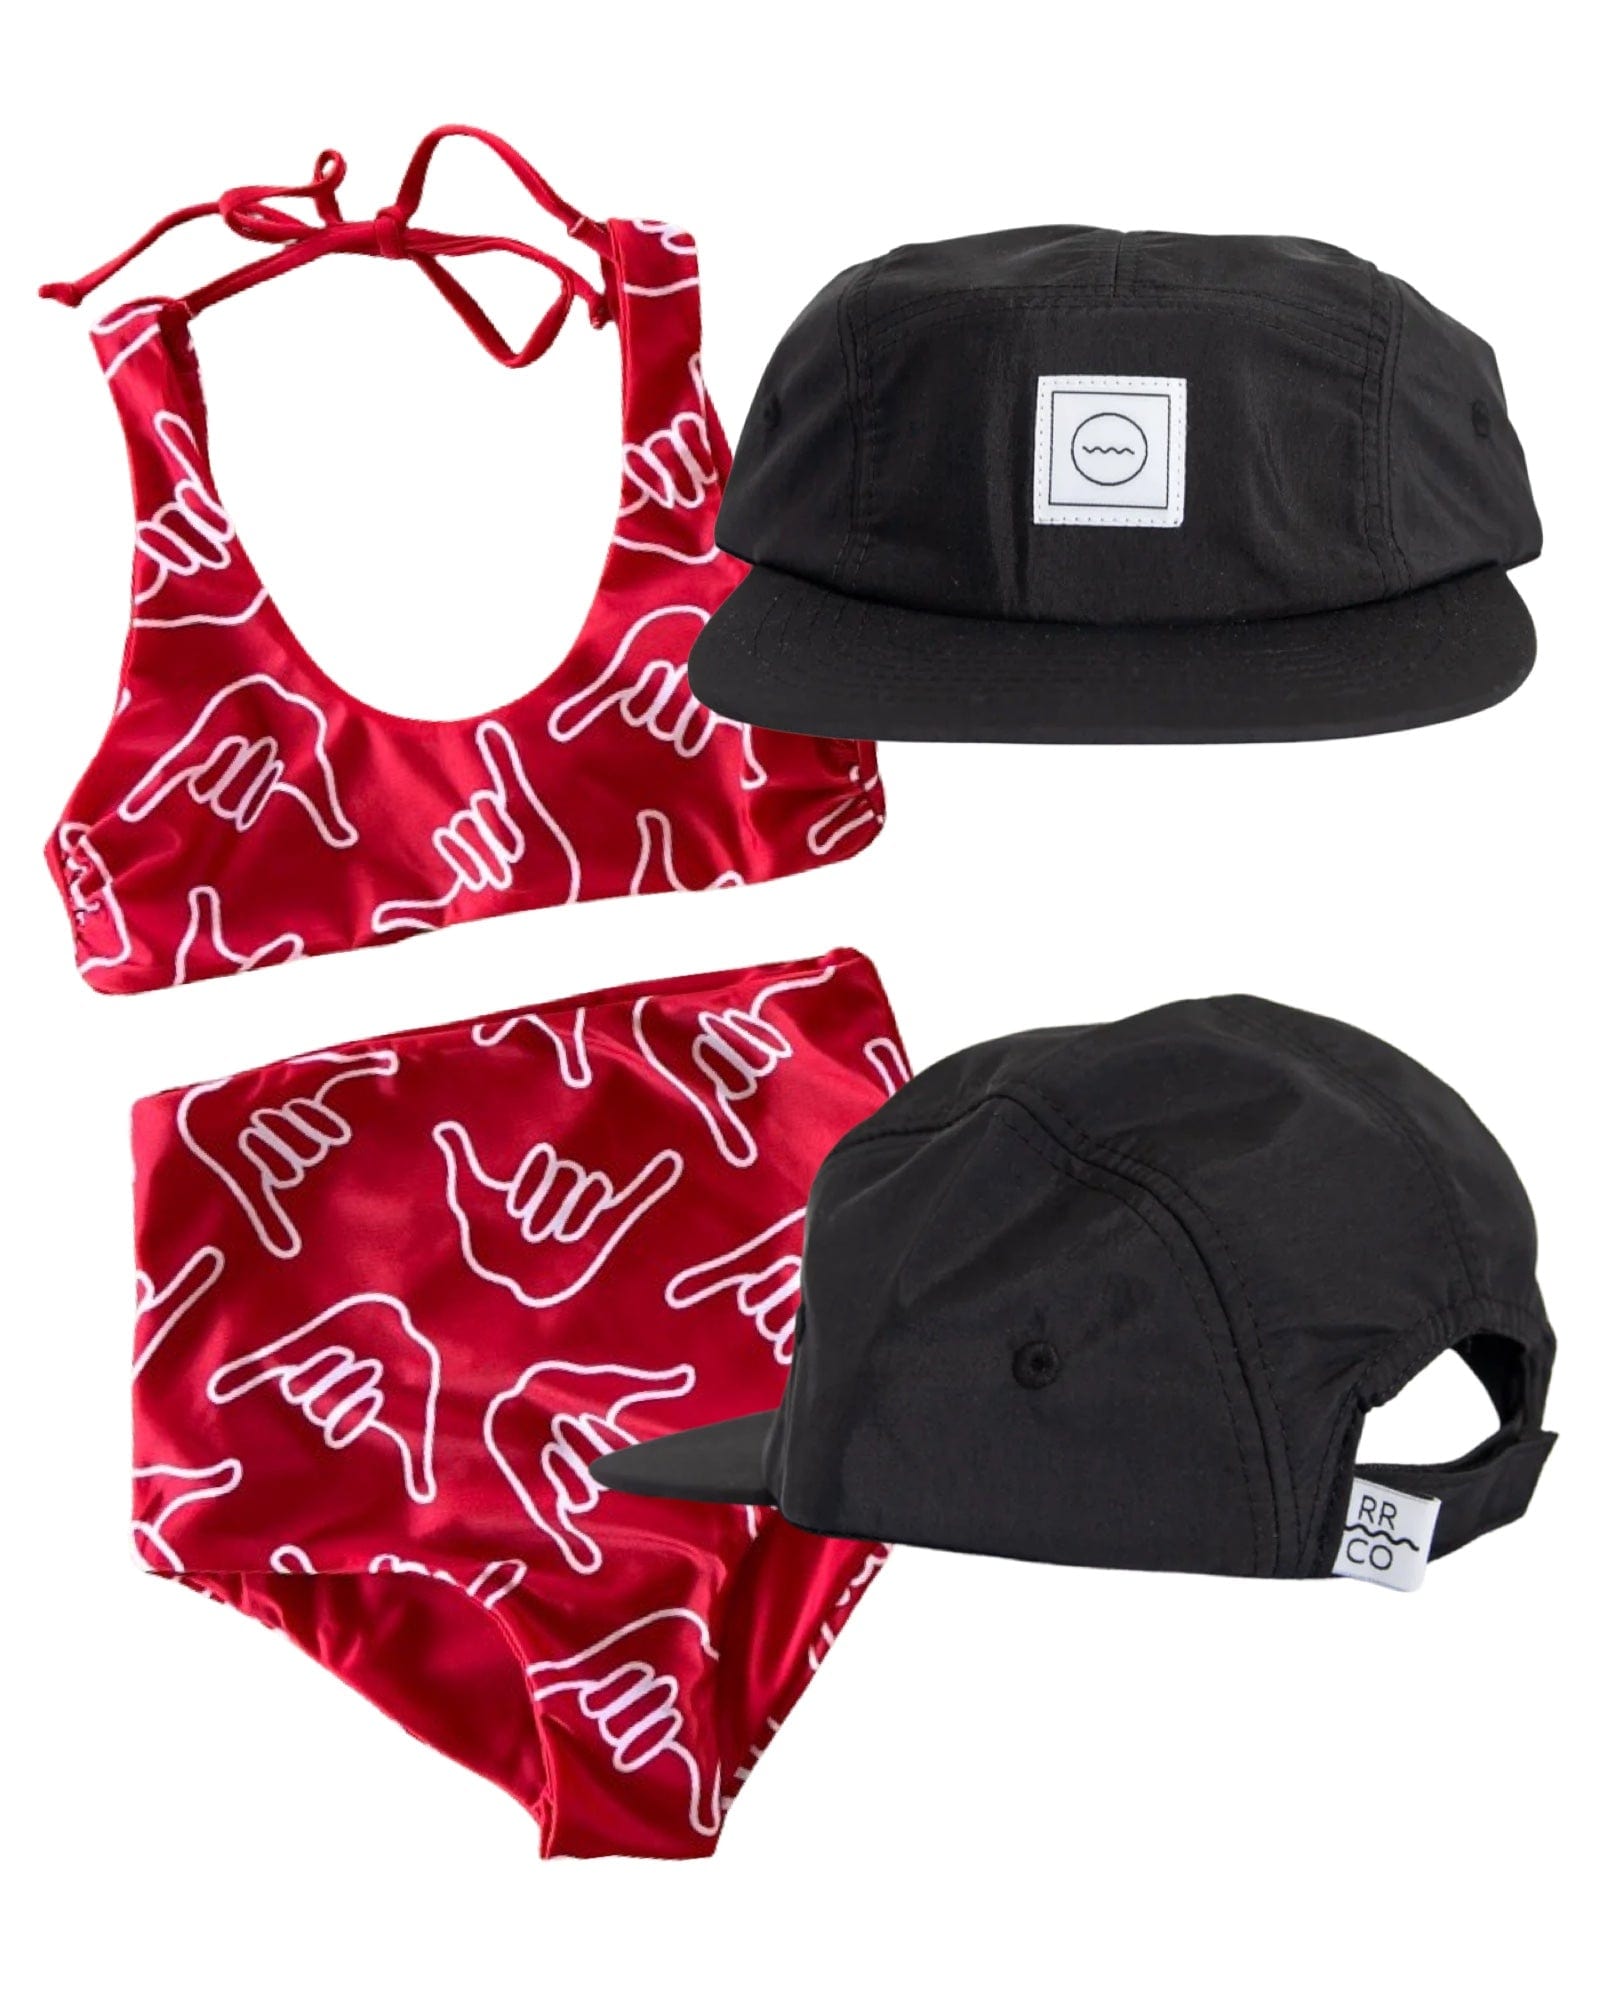 Girl's Red Shaka Bikini Set & RRCO Nylon Hat in Coal Bundle